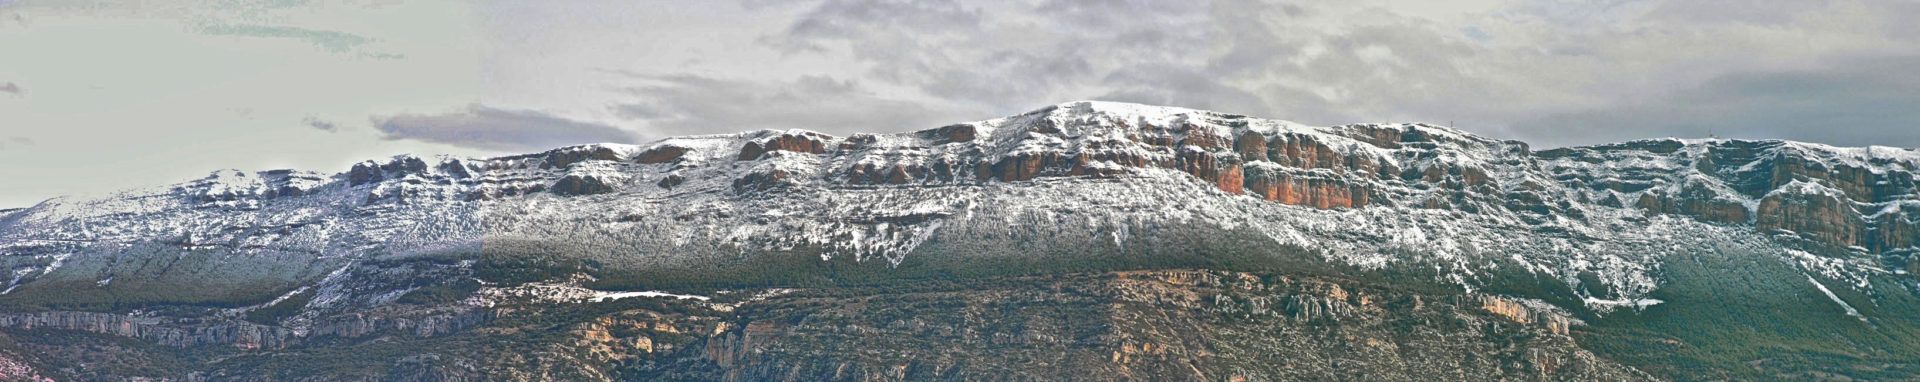 Sierra del Montsec nevada